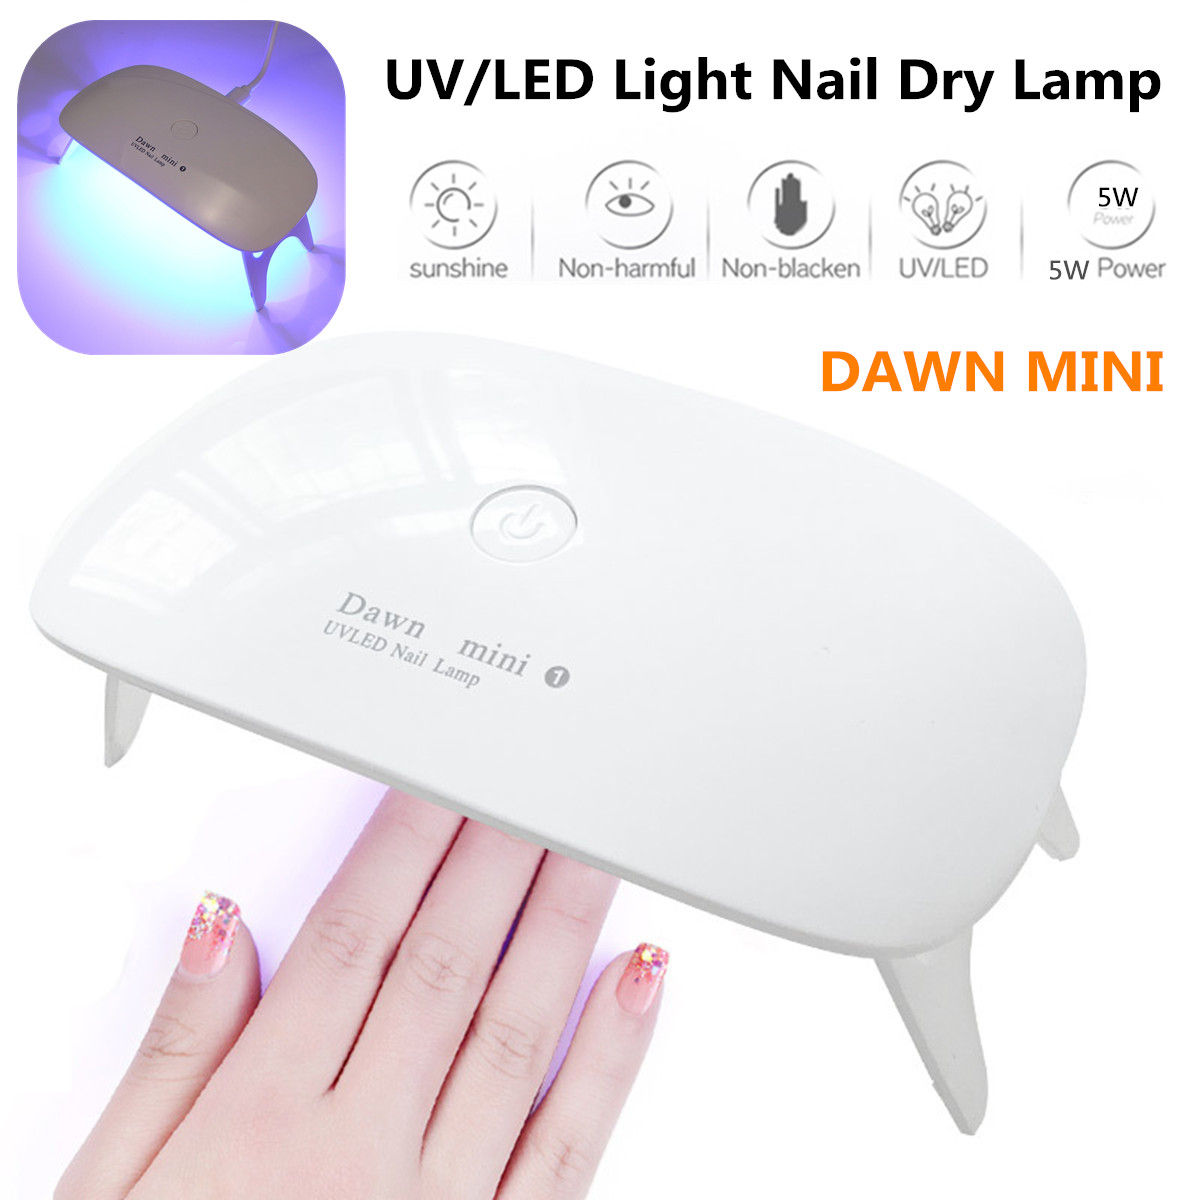 UV Nail Lamp 6W Sun Mini LED Lamp Gel Nail Polish Dryer Mouse Shape Dry  Rechargeable Home Use Led Nail Lamps Sale, Price Reviews Gearbest | Yaju Mini  Uv Led Nail Lamp,